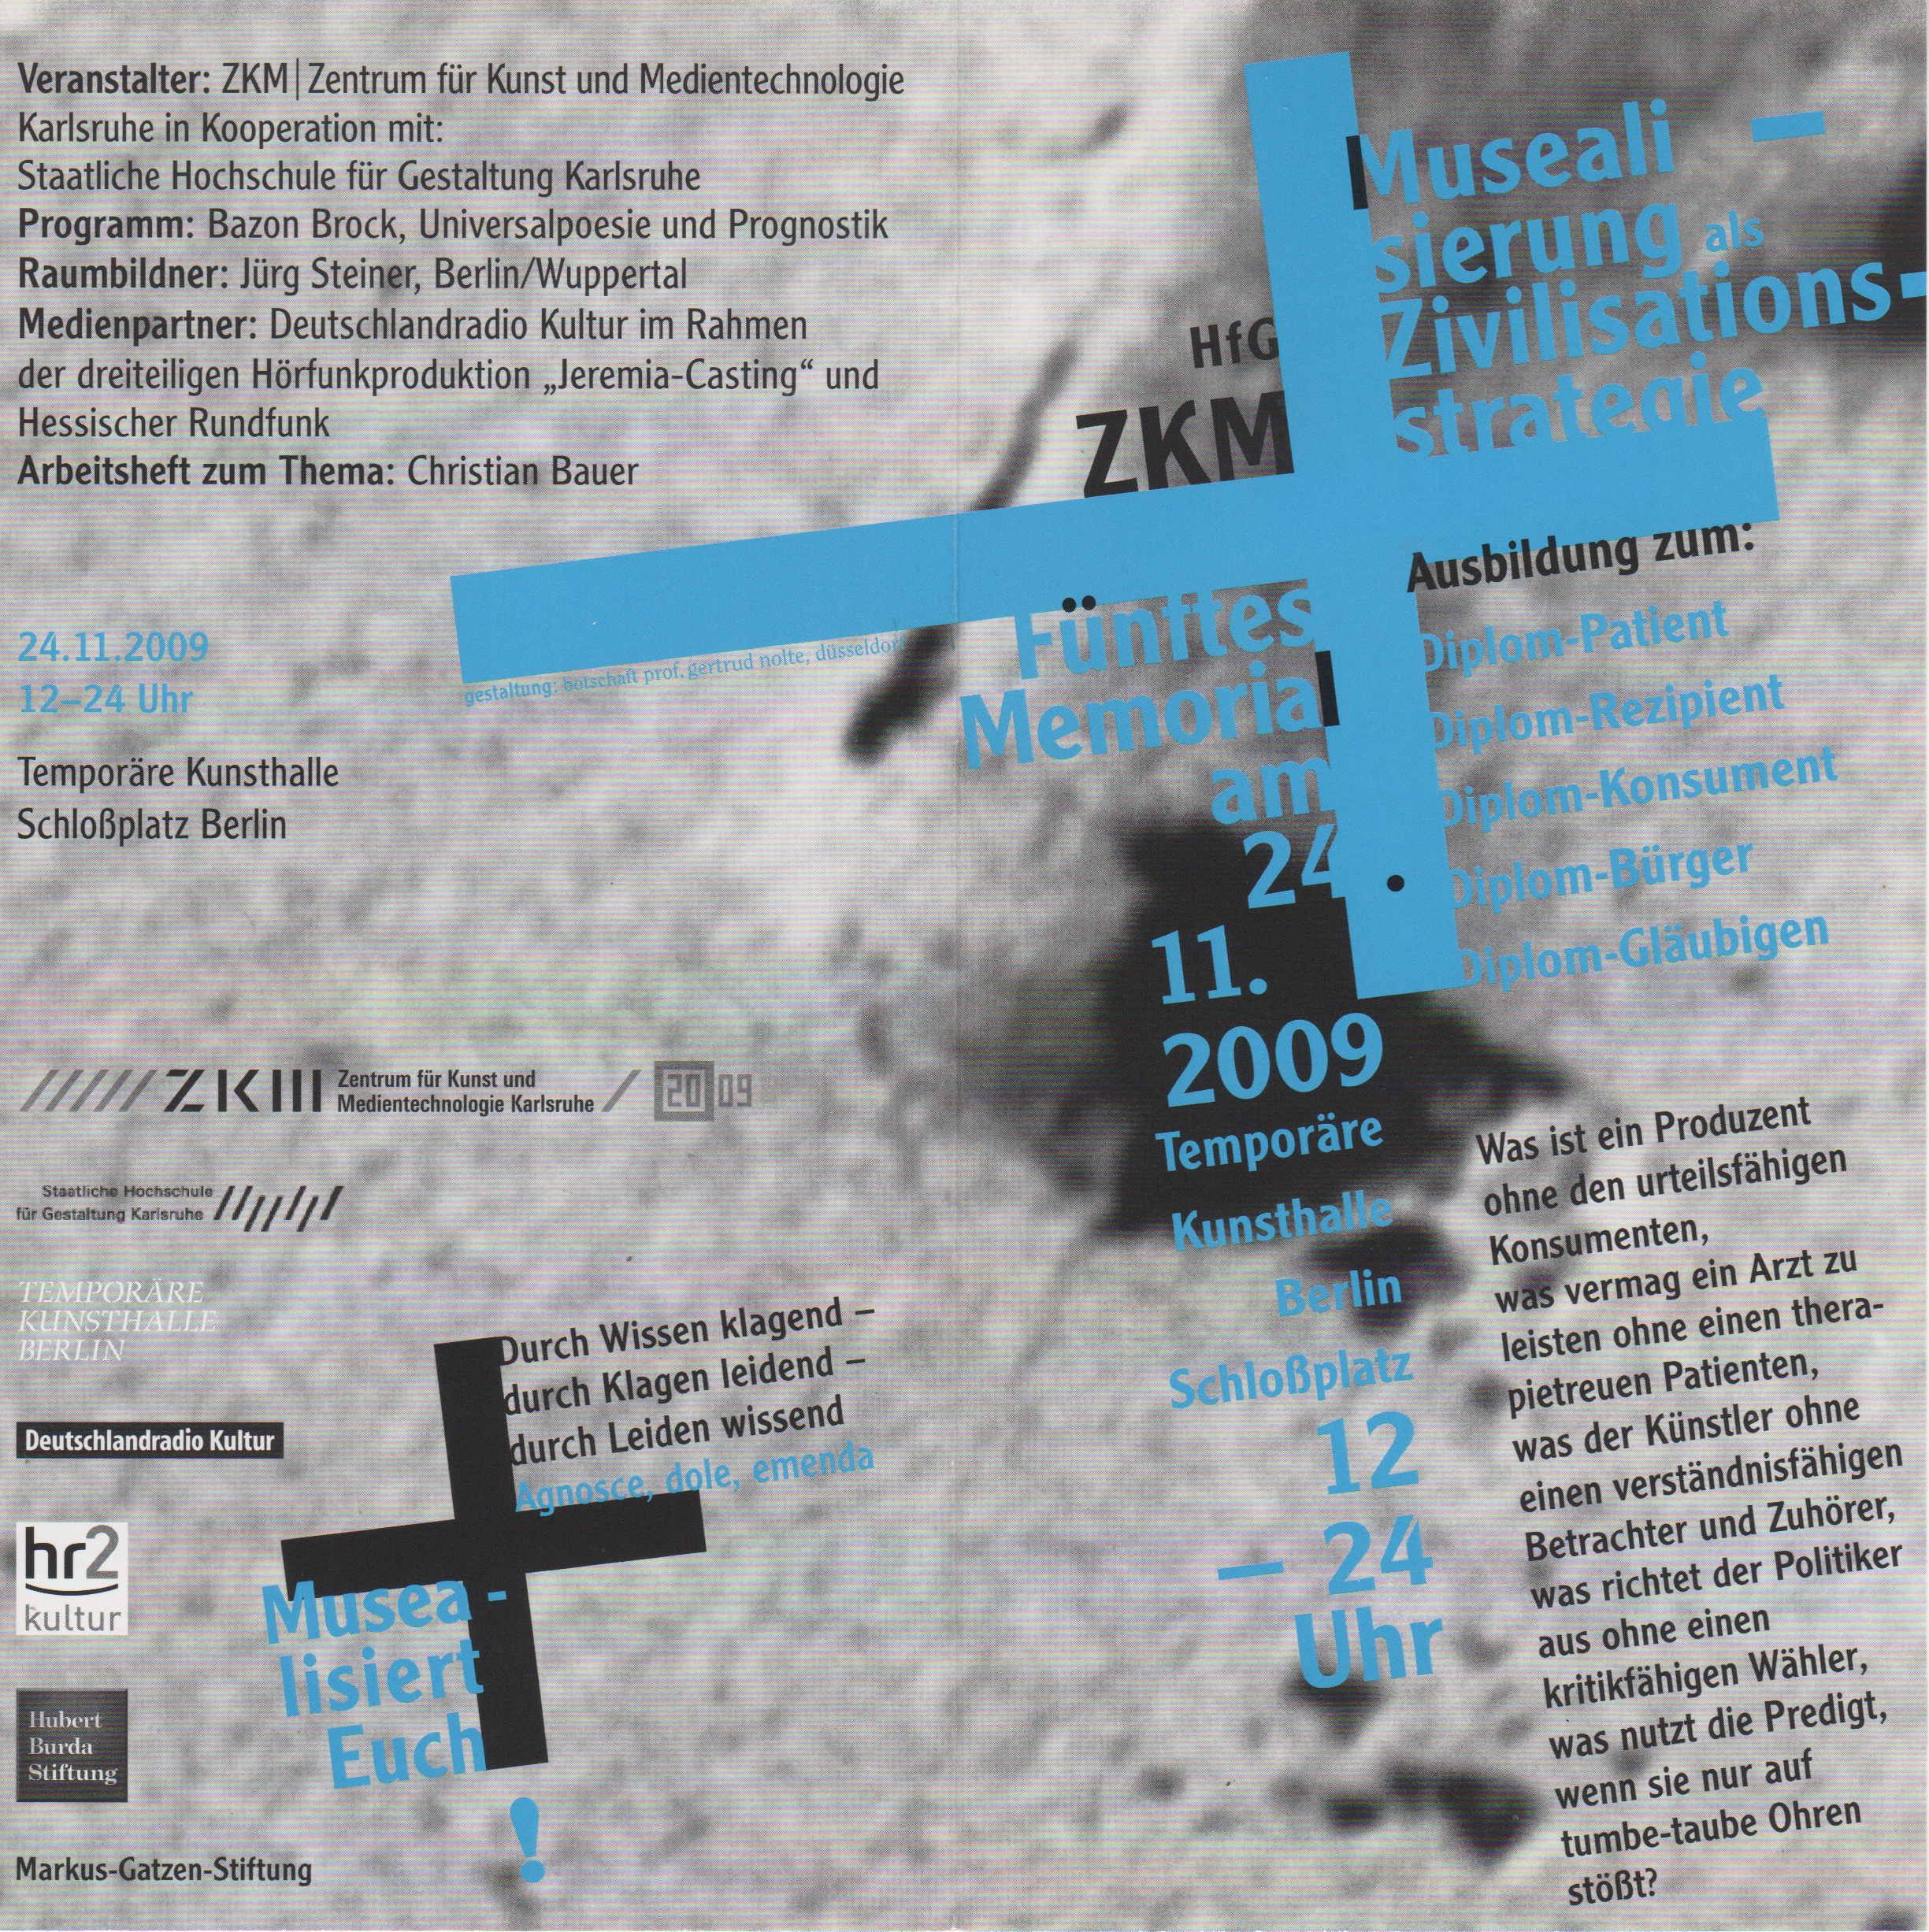 Musealisierung als Zivilisationsstrategie, Temporäre Kunsthalle Berlin 24.11.2009, Bild: Verso.